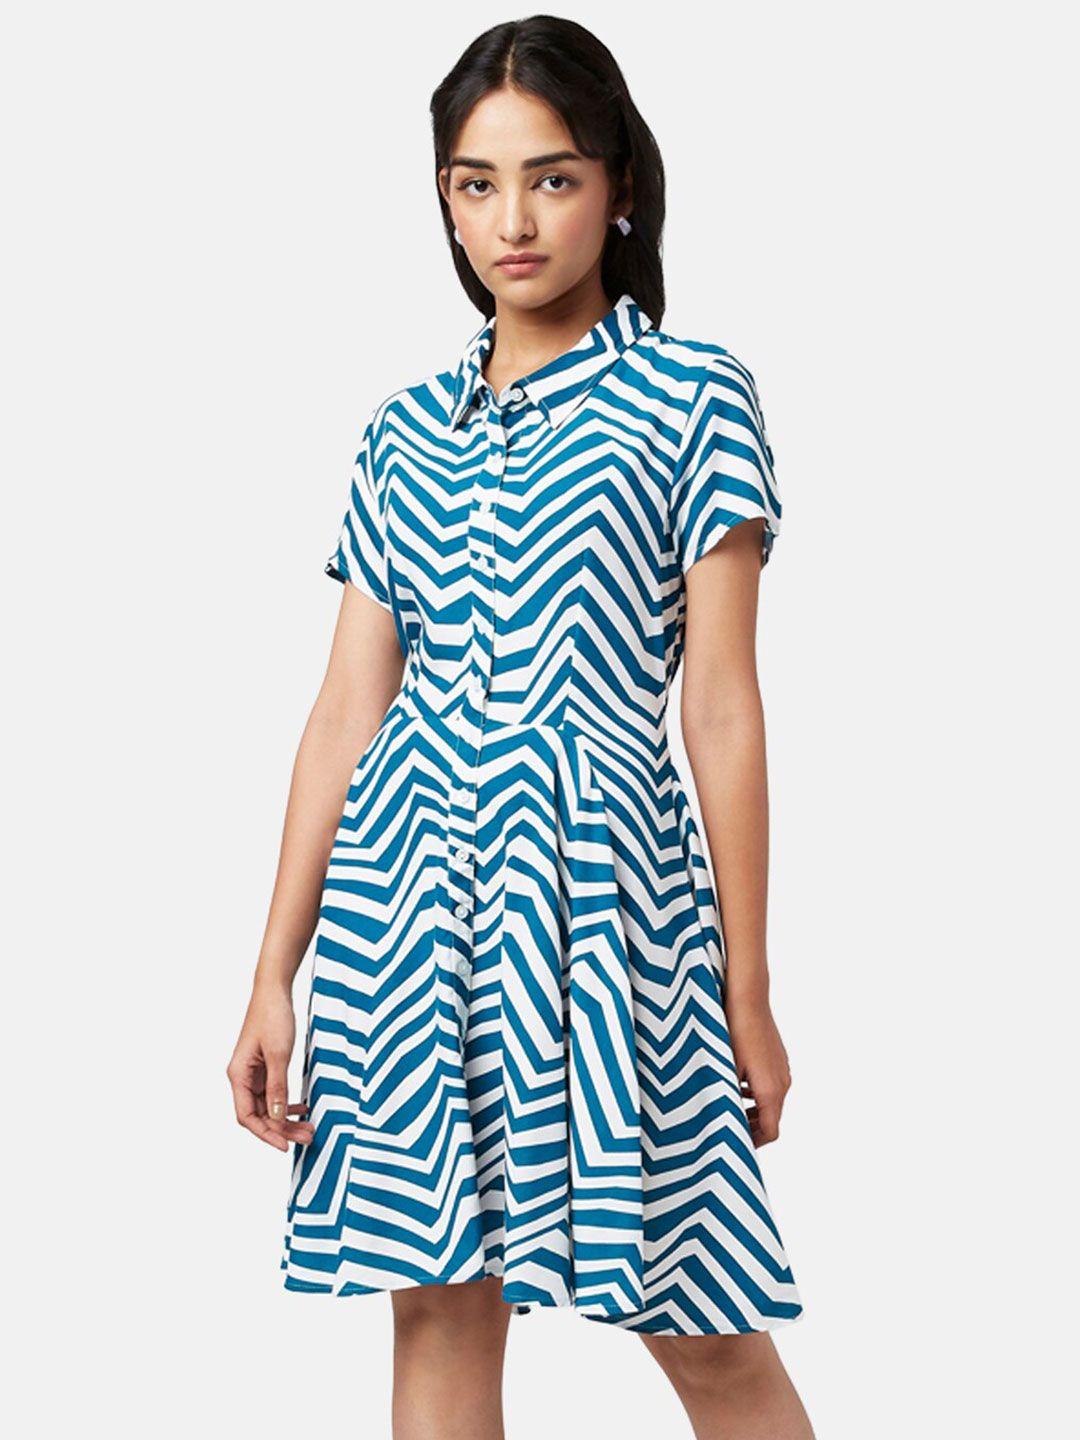 yu by pantaloons navy blue striped ethnic dress